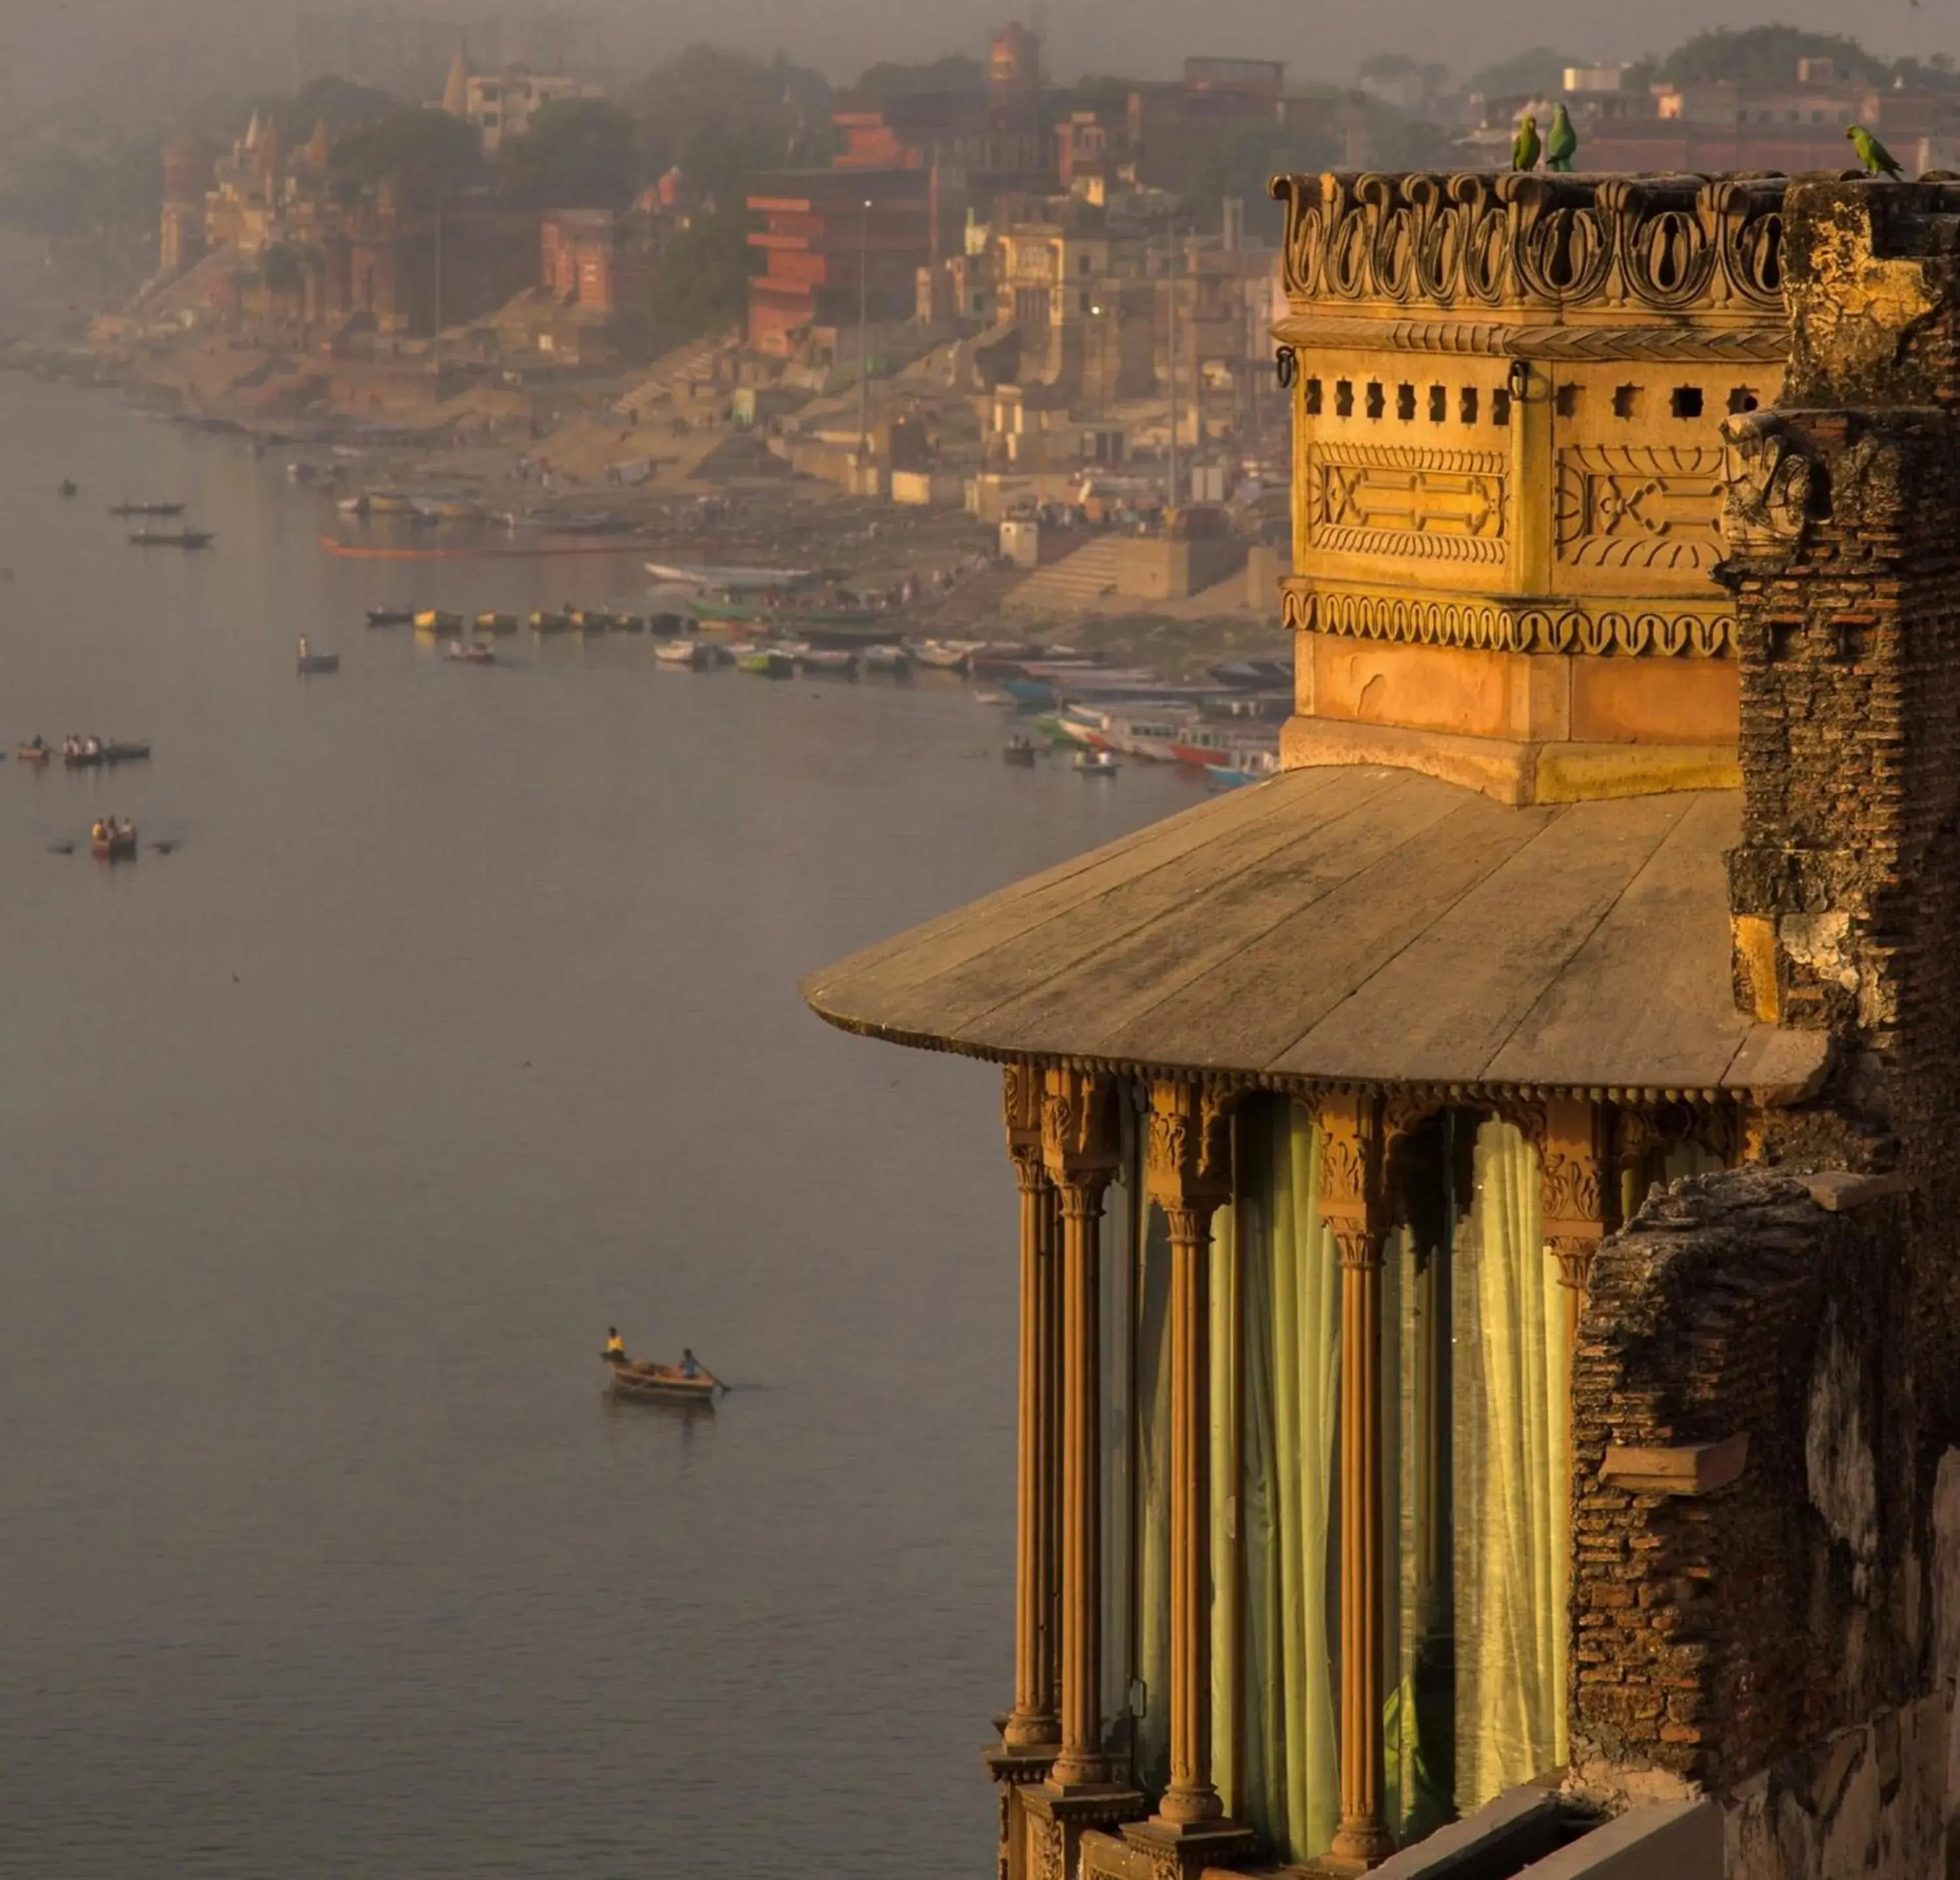 Facade/entrance in BrijRama Palace, Varanasi by the Ganges